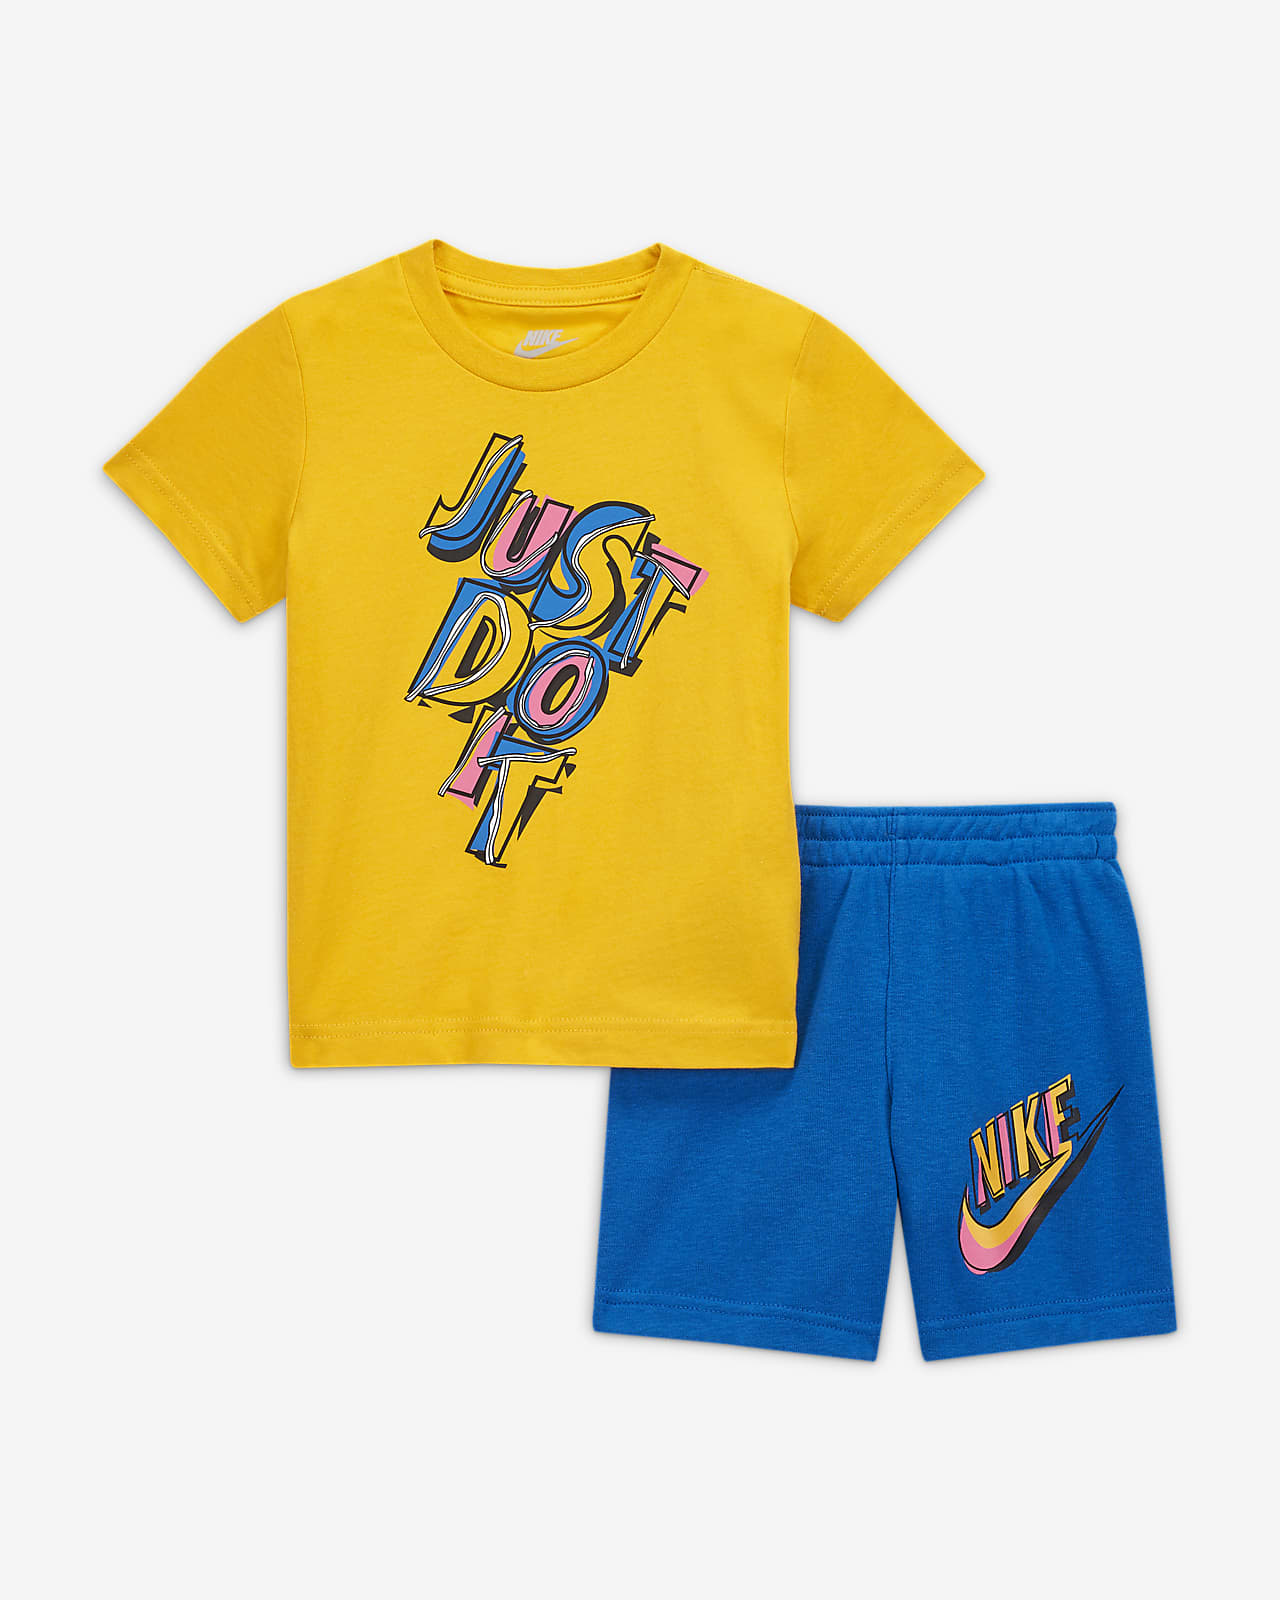 https://static.nike.com/a/images/t_PDP_1280_v1/f_auto,q_auto:eco/c72849c7-9ca1-4ca0-a462-ec02a1667c46/sportswear-toddler-t-shirt-and-shorts-set-dp8Bcv.png